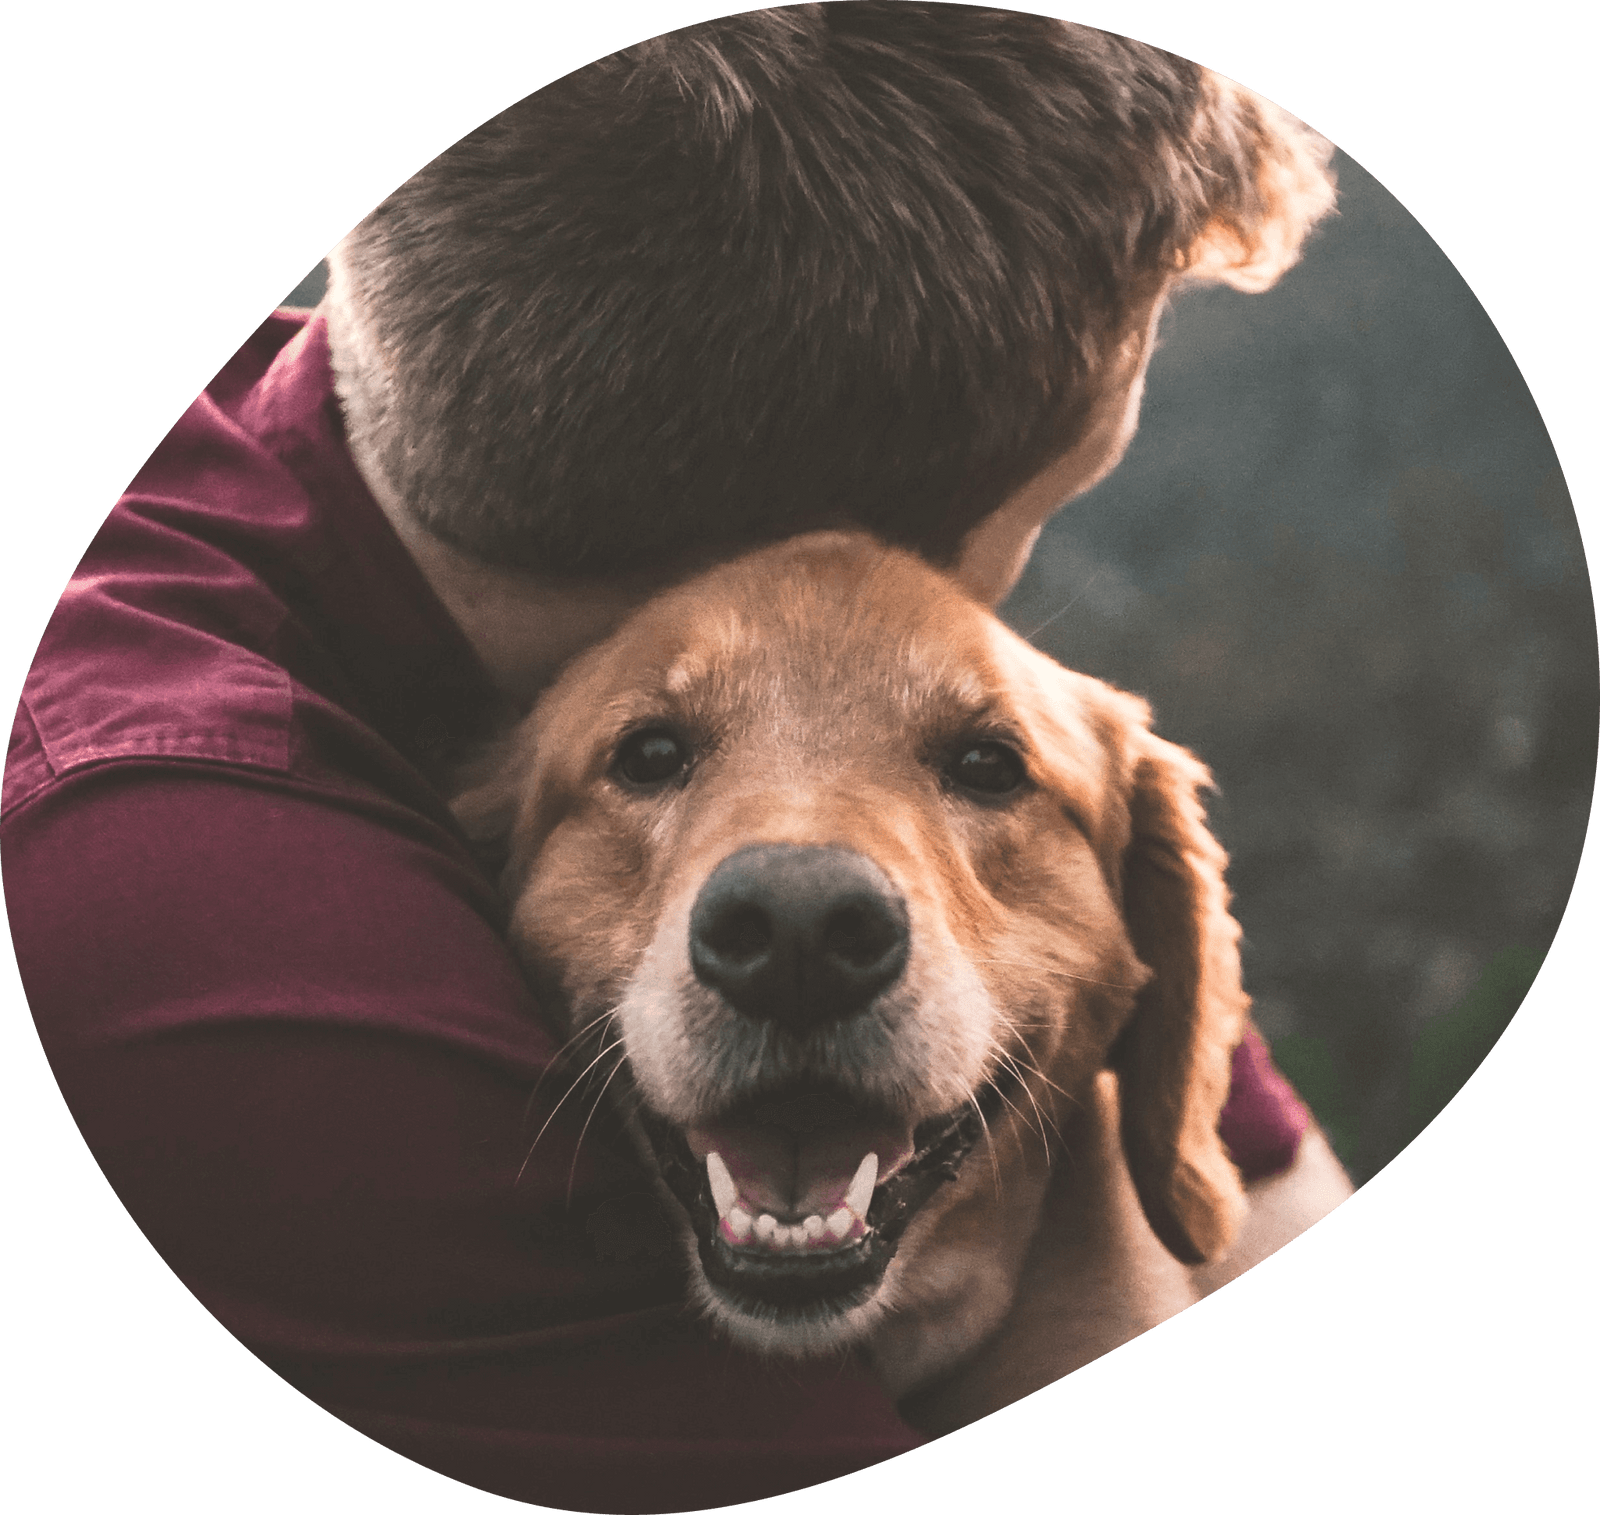 Man hugging a dog